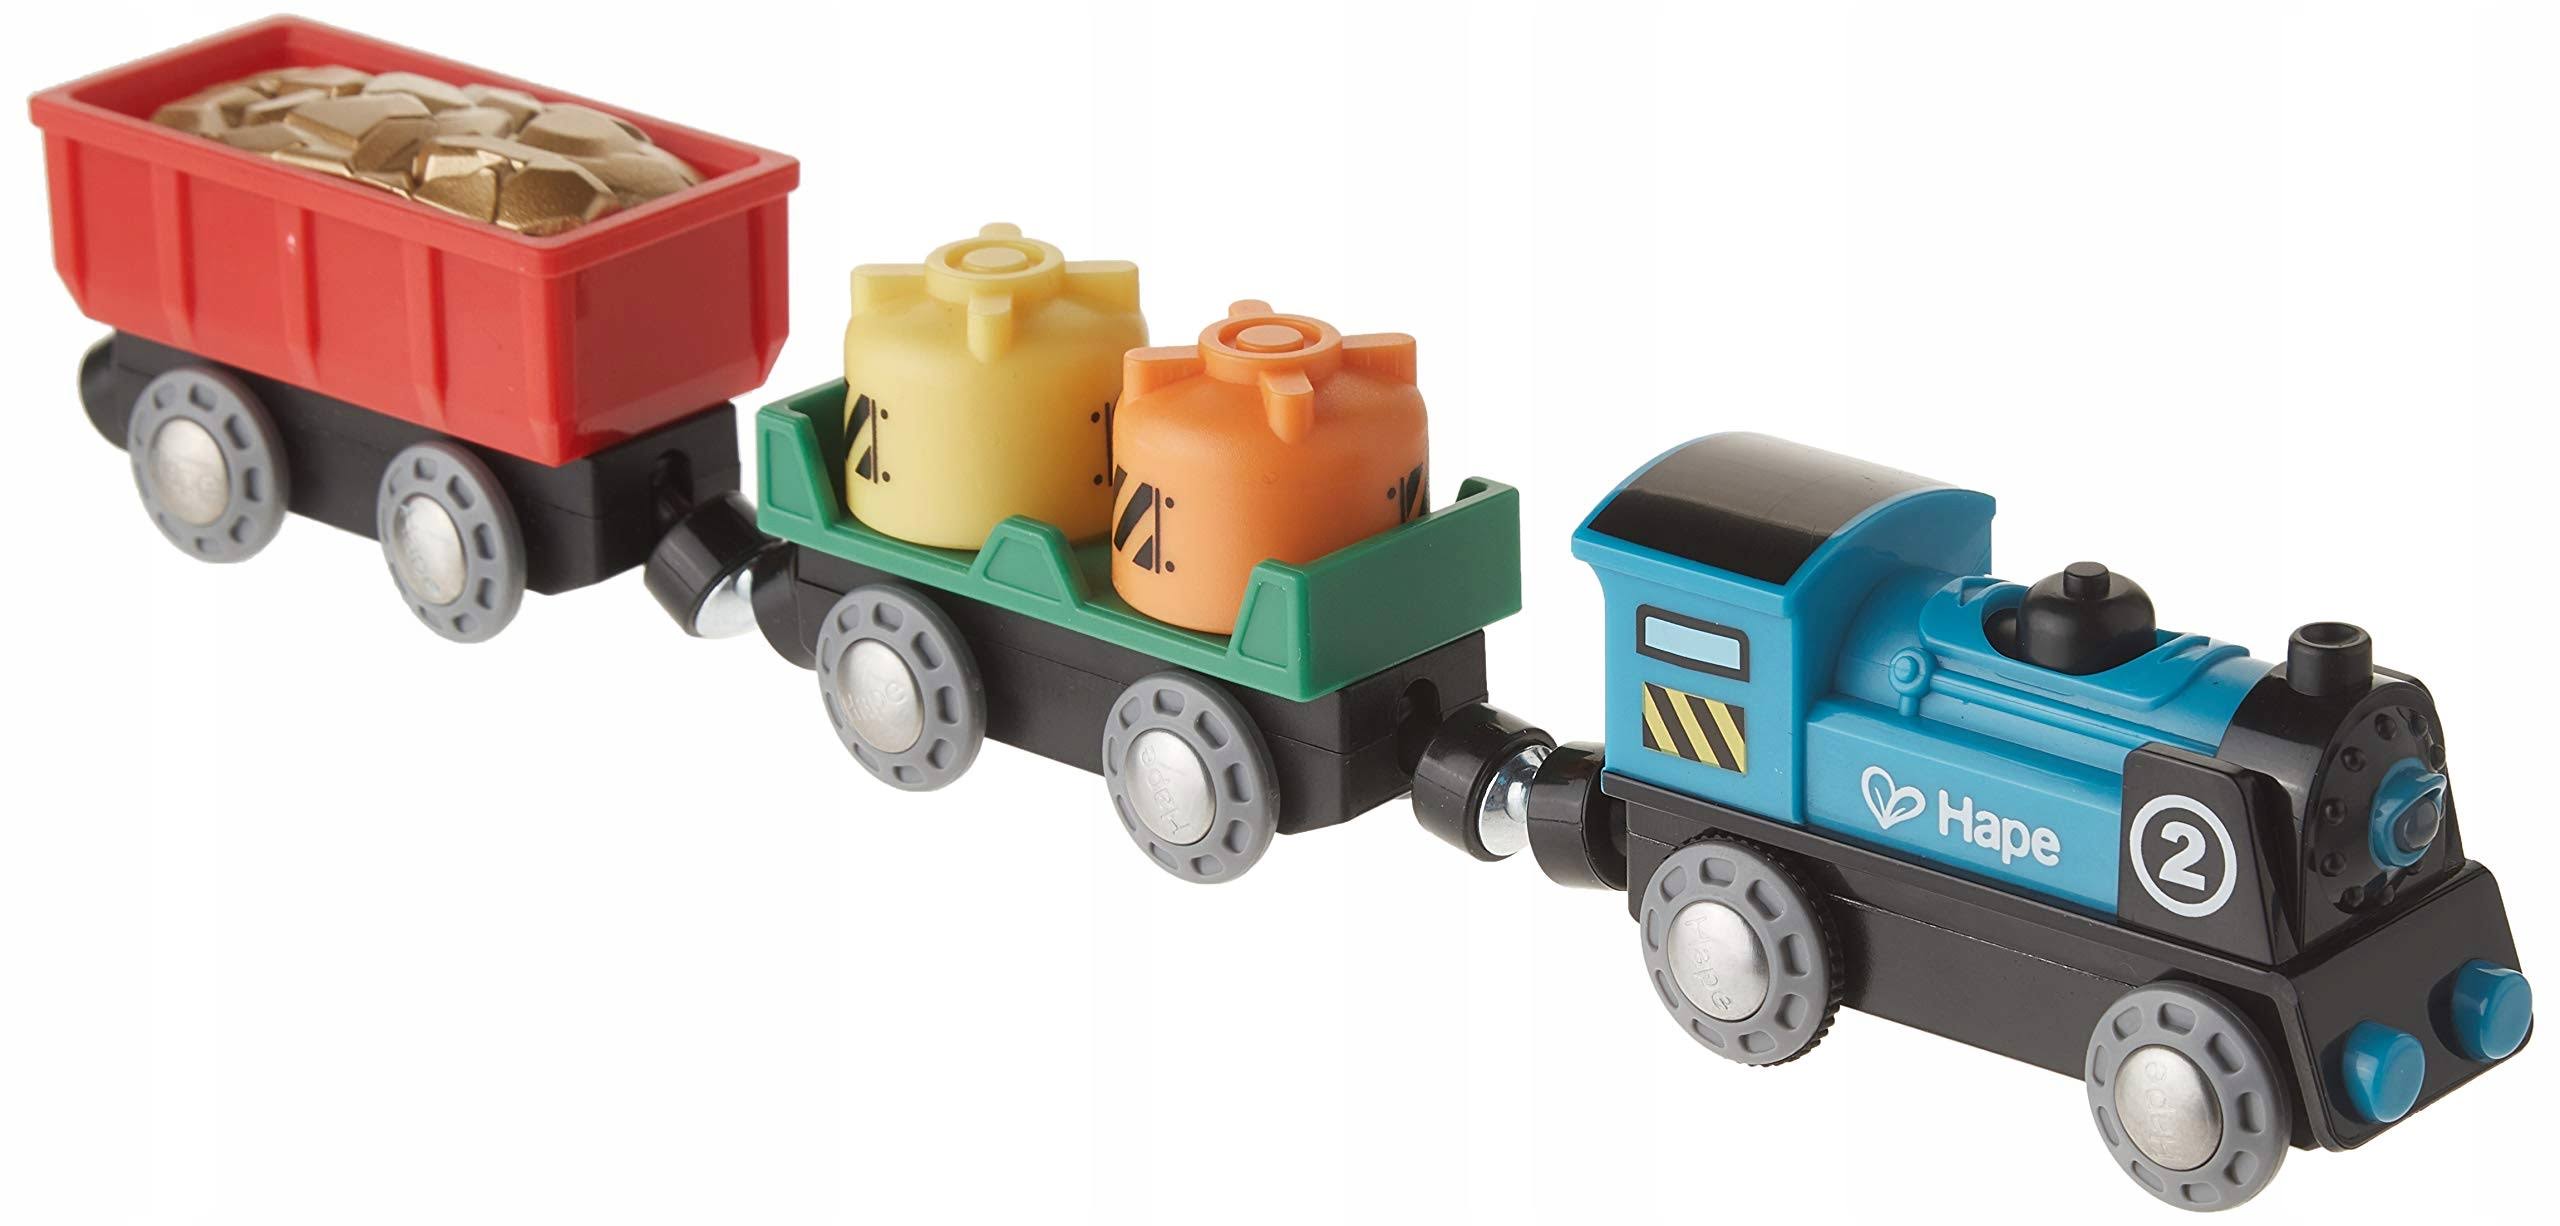 Hape Battery Powered Train Engine Toy Set